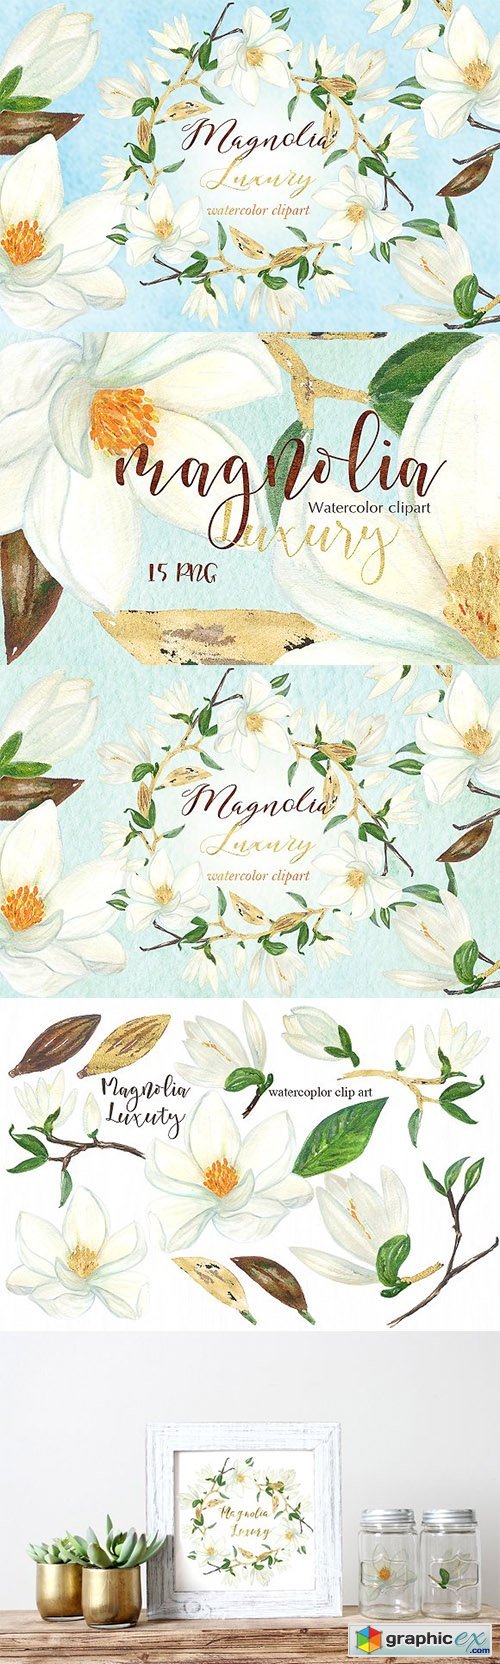 Magnolia white luxury clipart